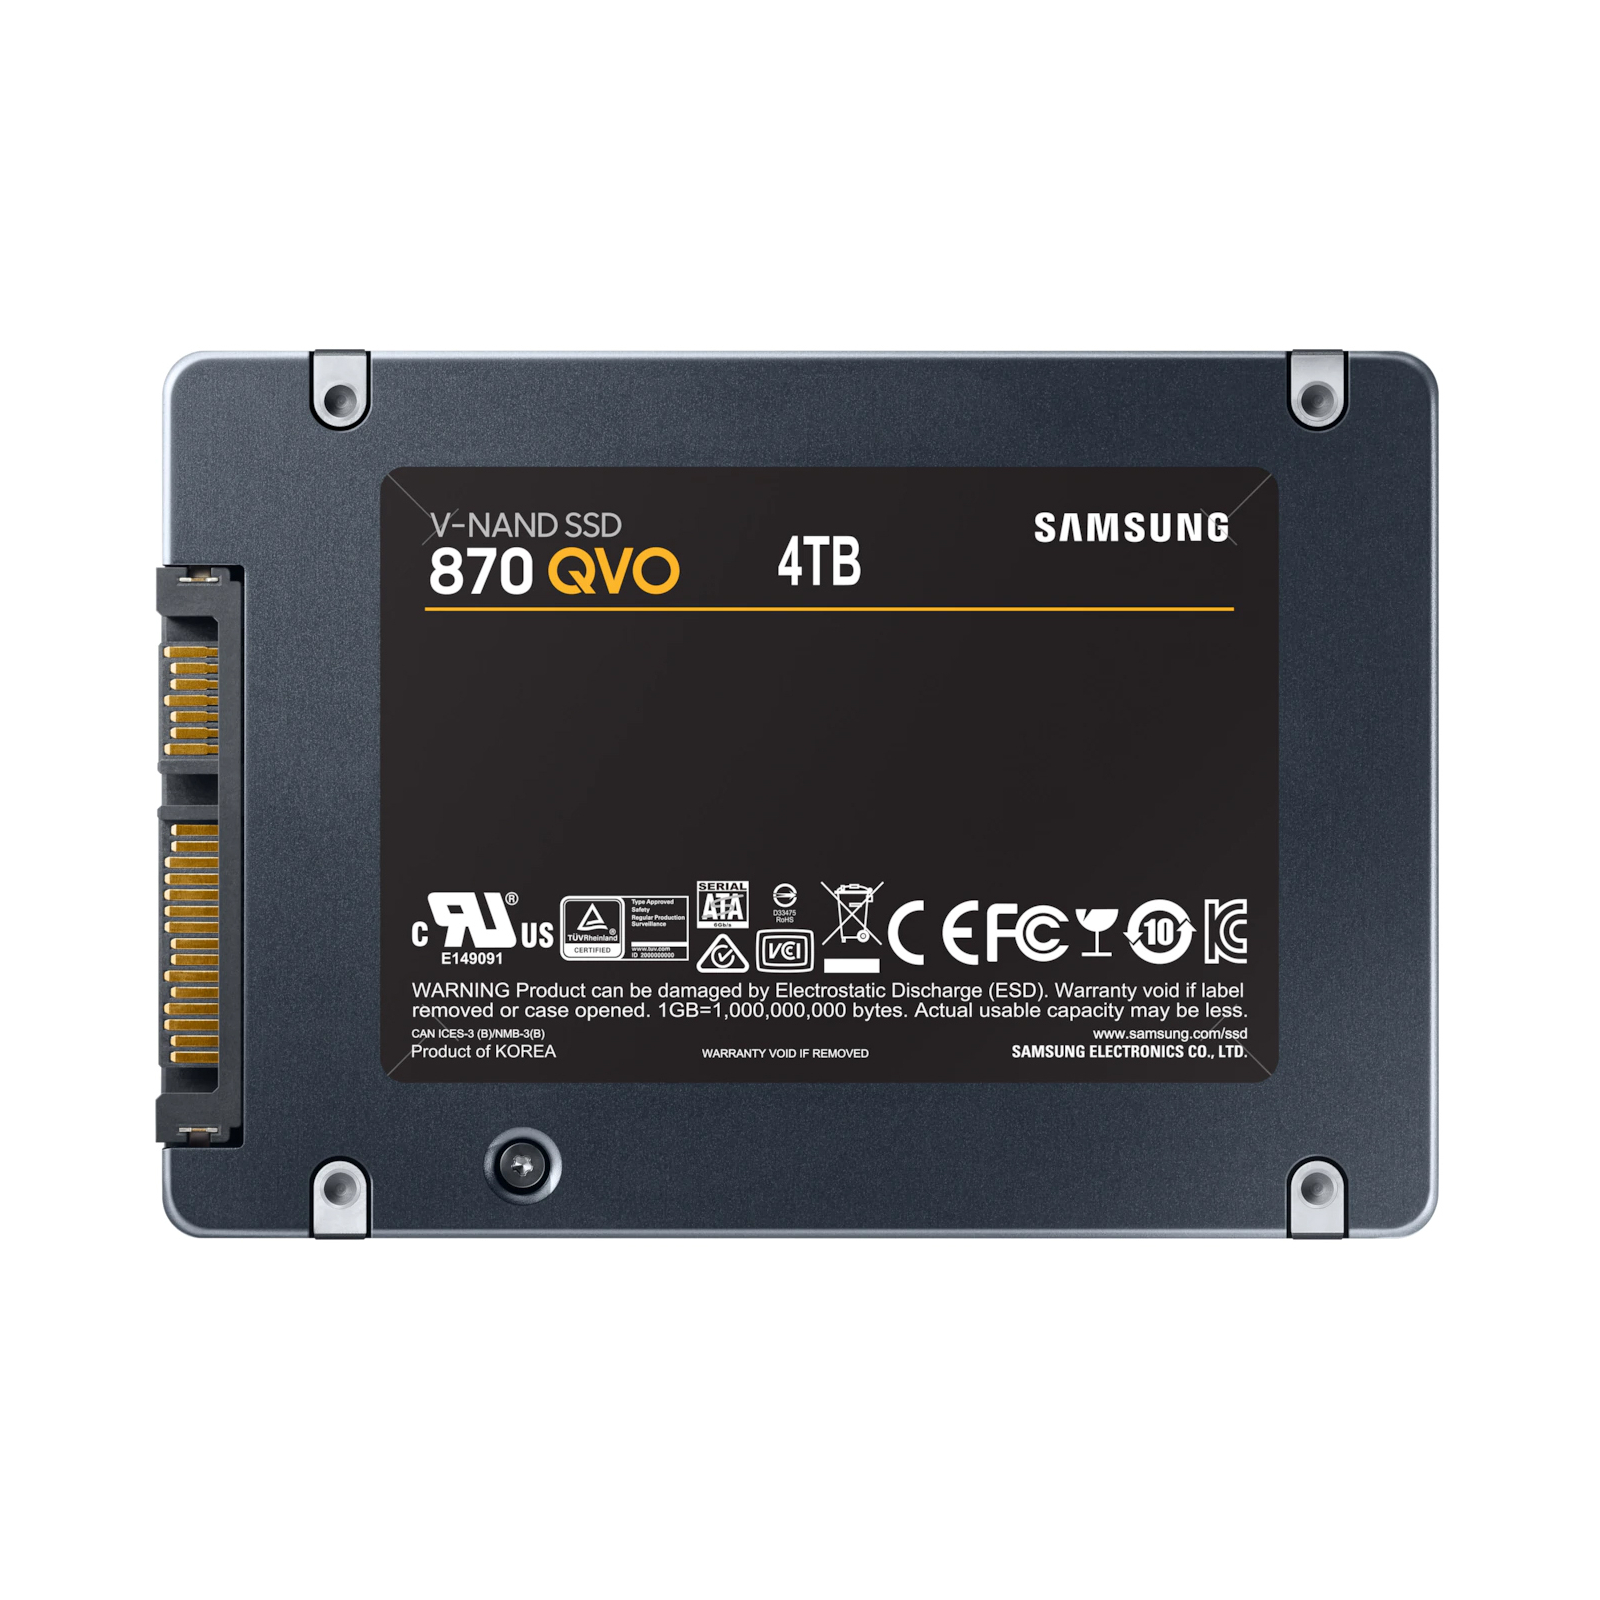 Накопитель SSD 2.5" 8TB Samsung (MZ-77Q8T0BW) изображение 2